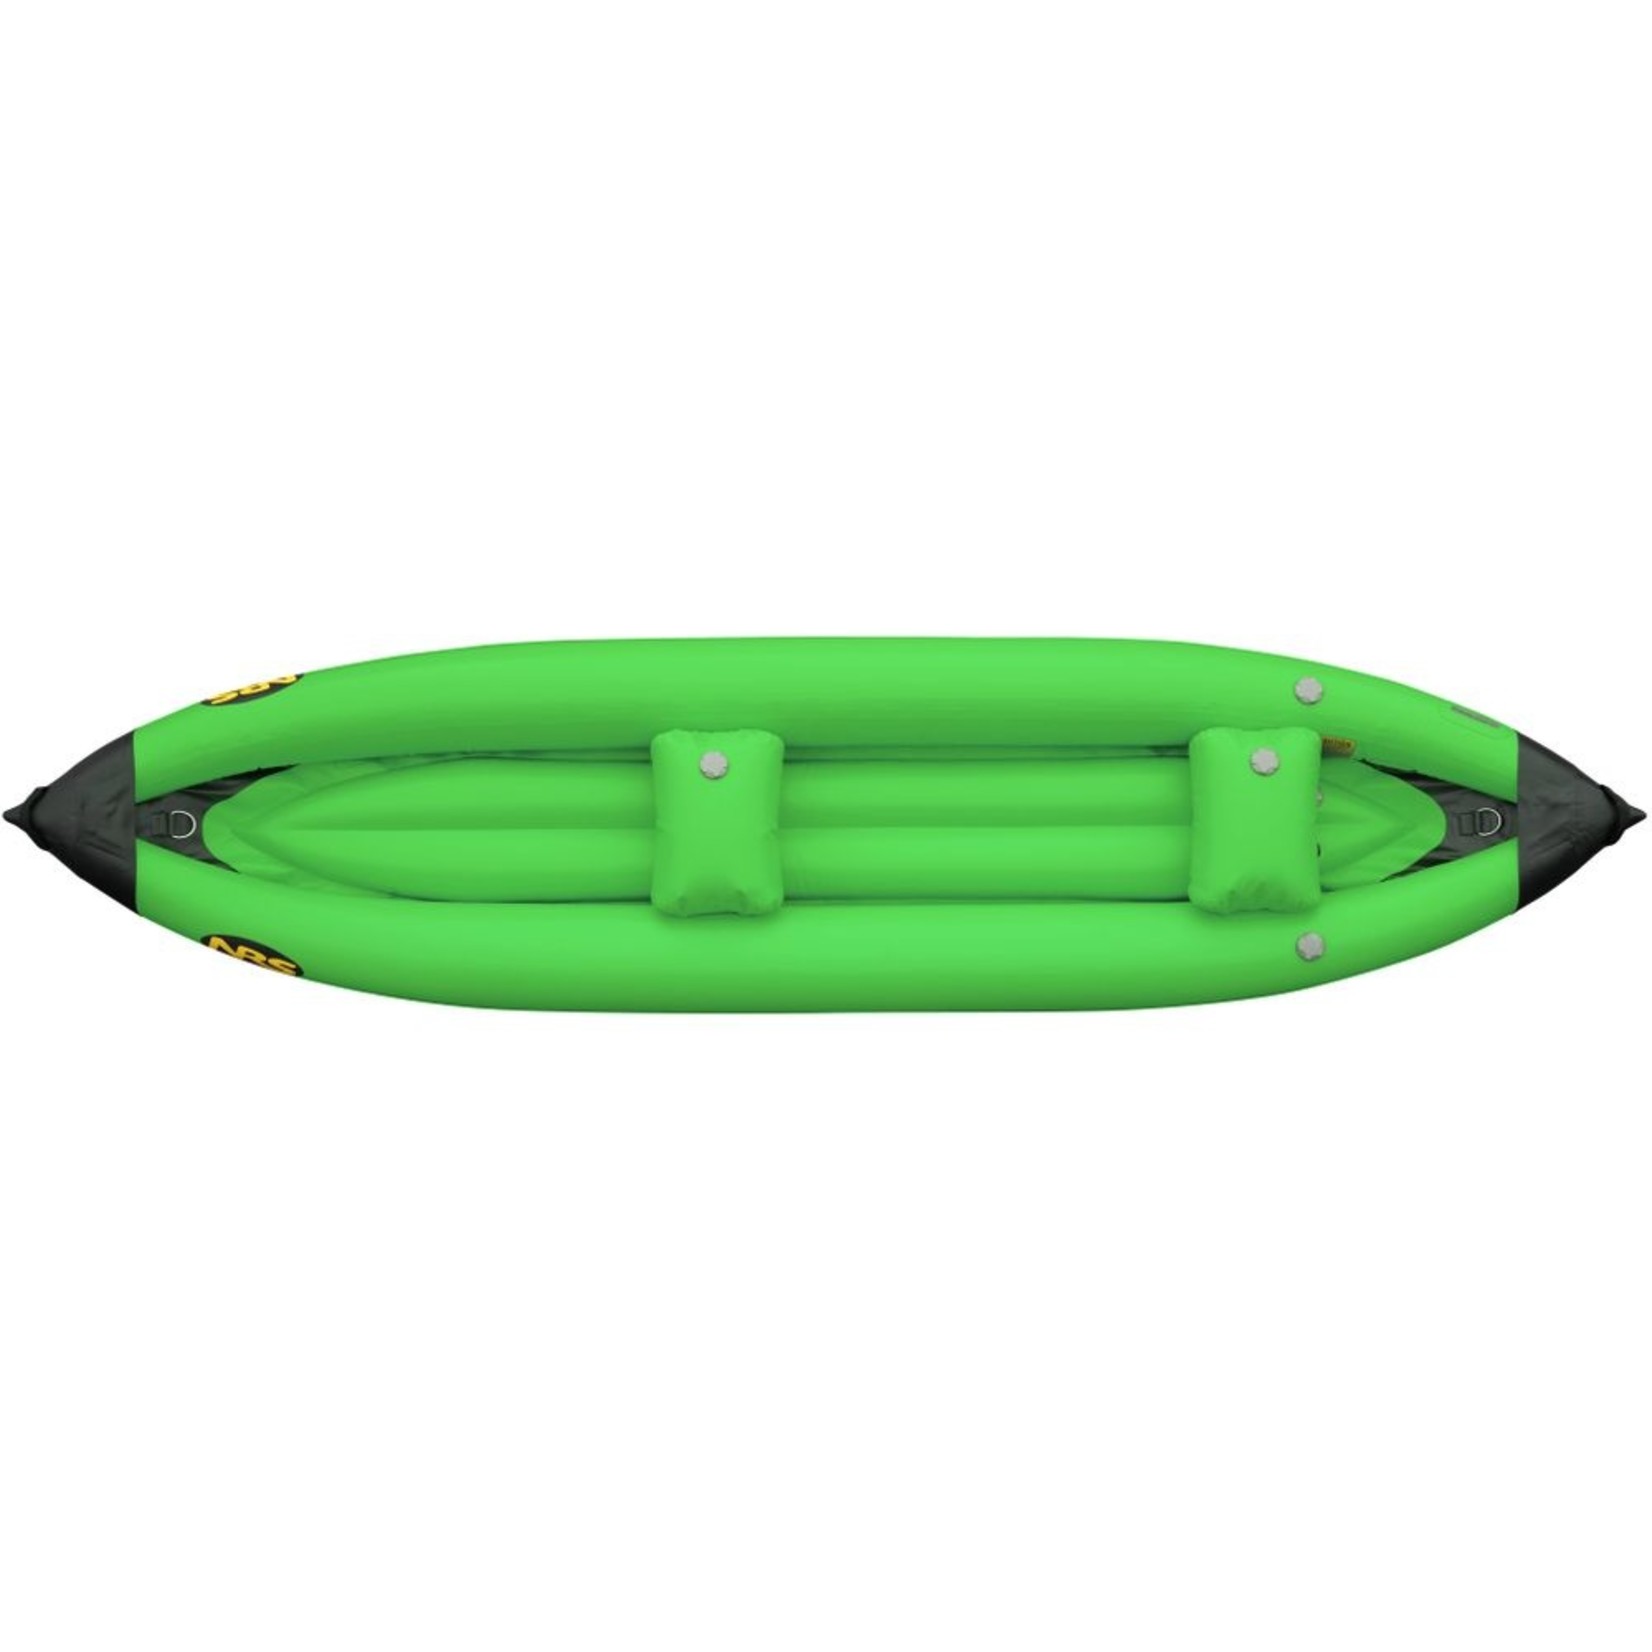 NRS NRS MaverIK II Inflatable Kayak